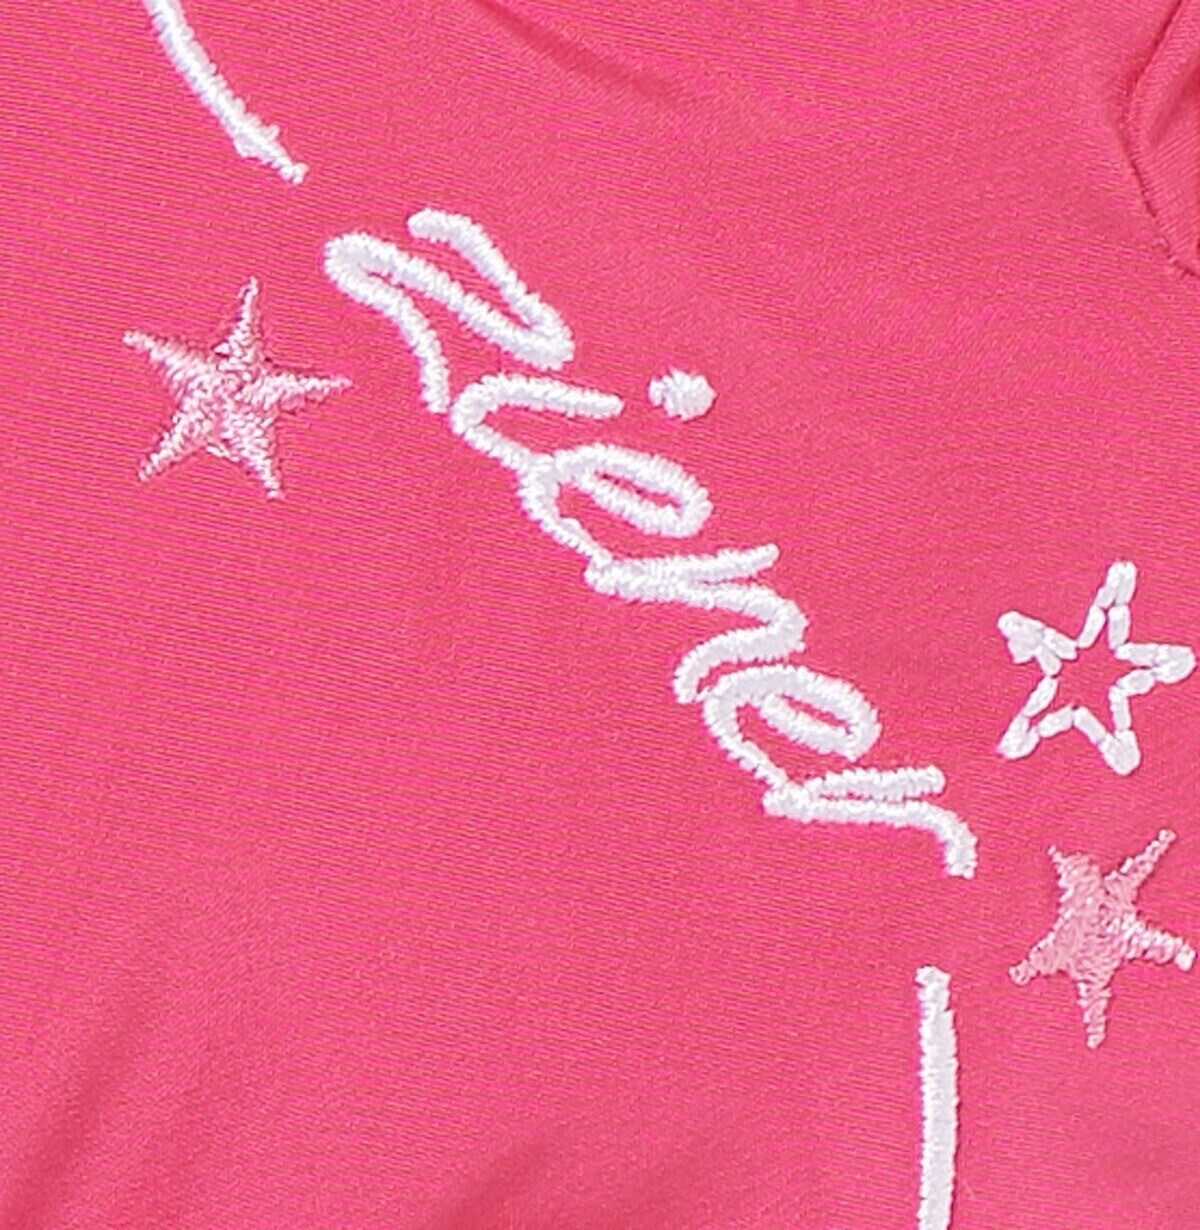 Ziener Lula AS(R) Girls Jr pop pink ab 24,99 € | Preisvergleich bei